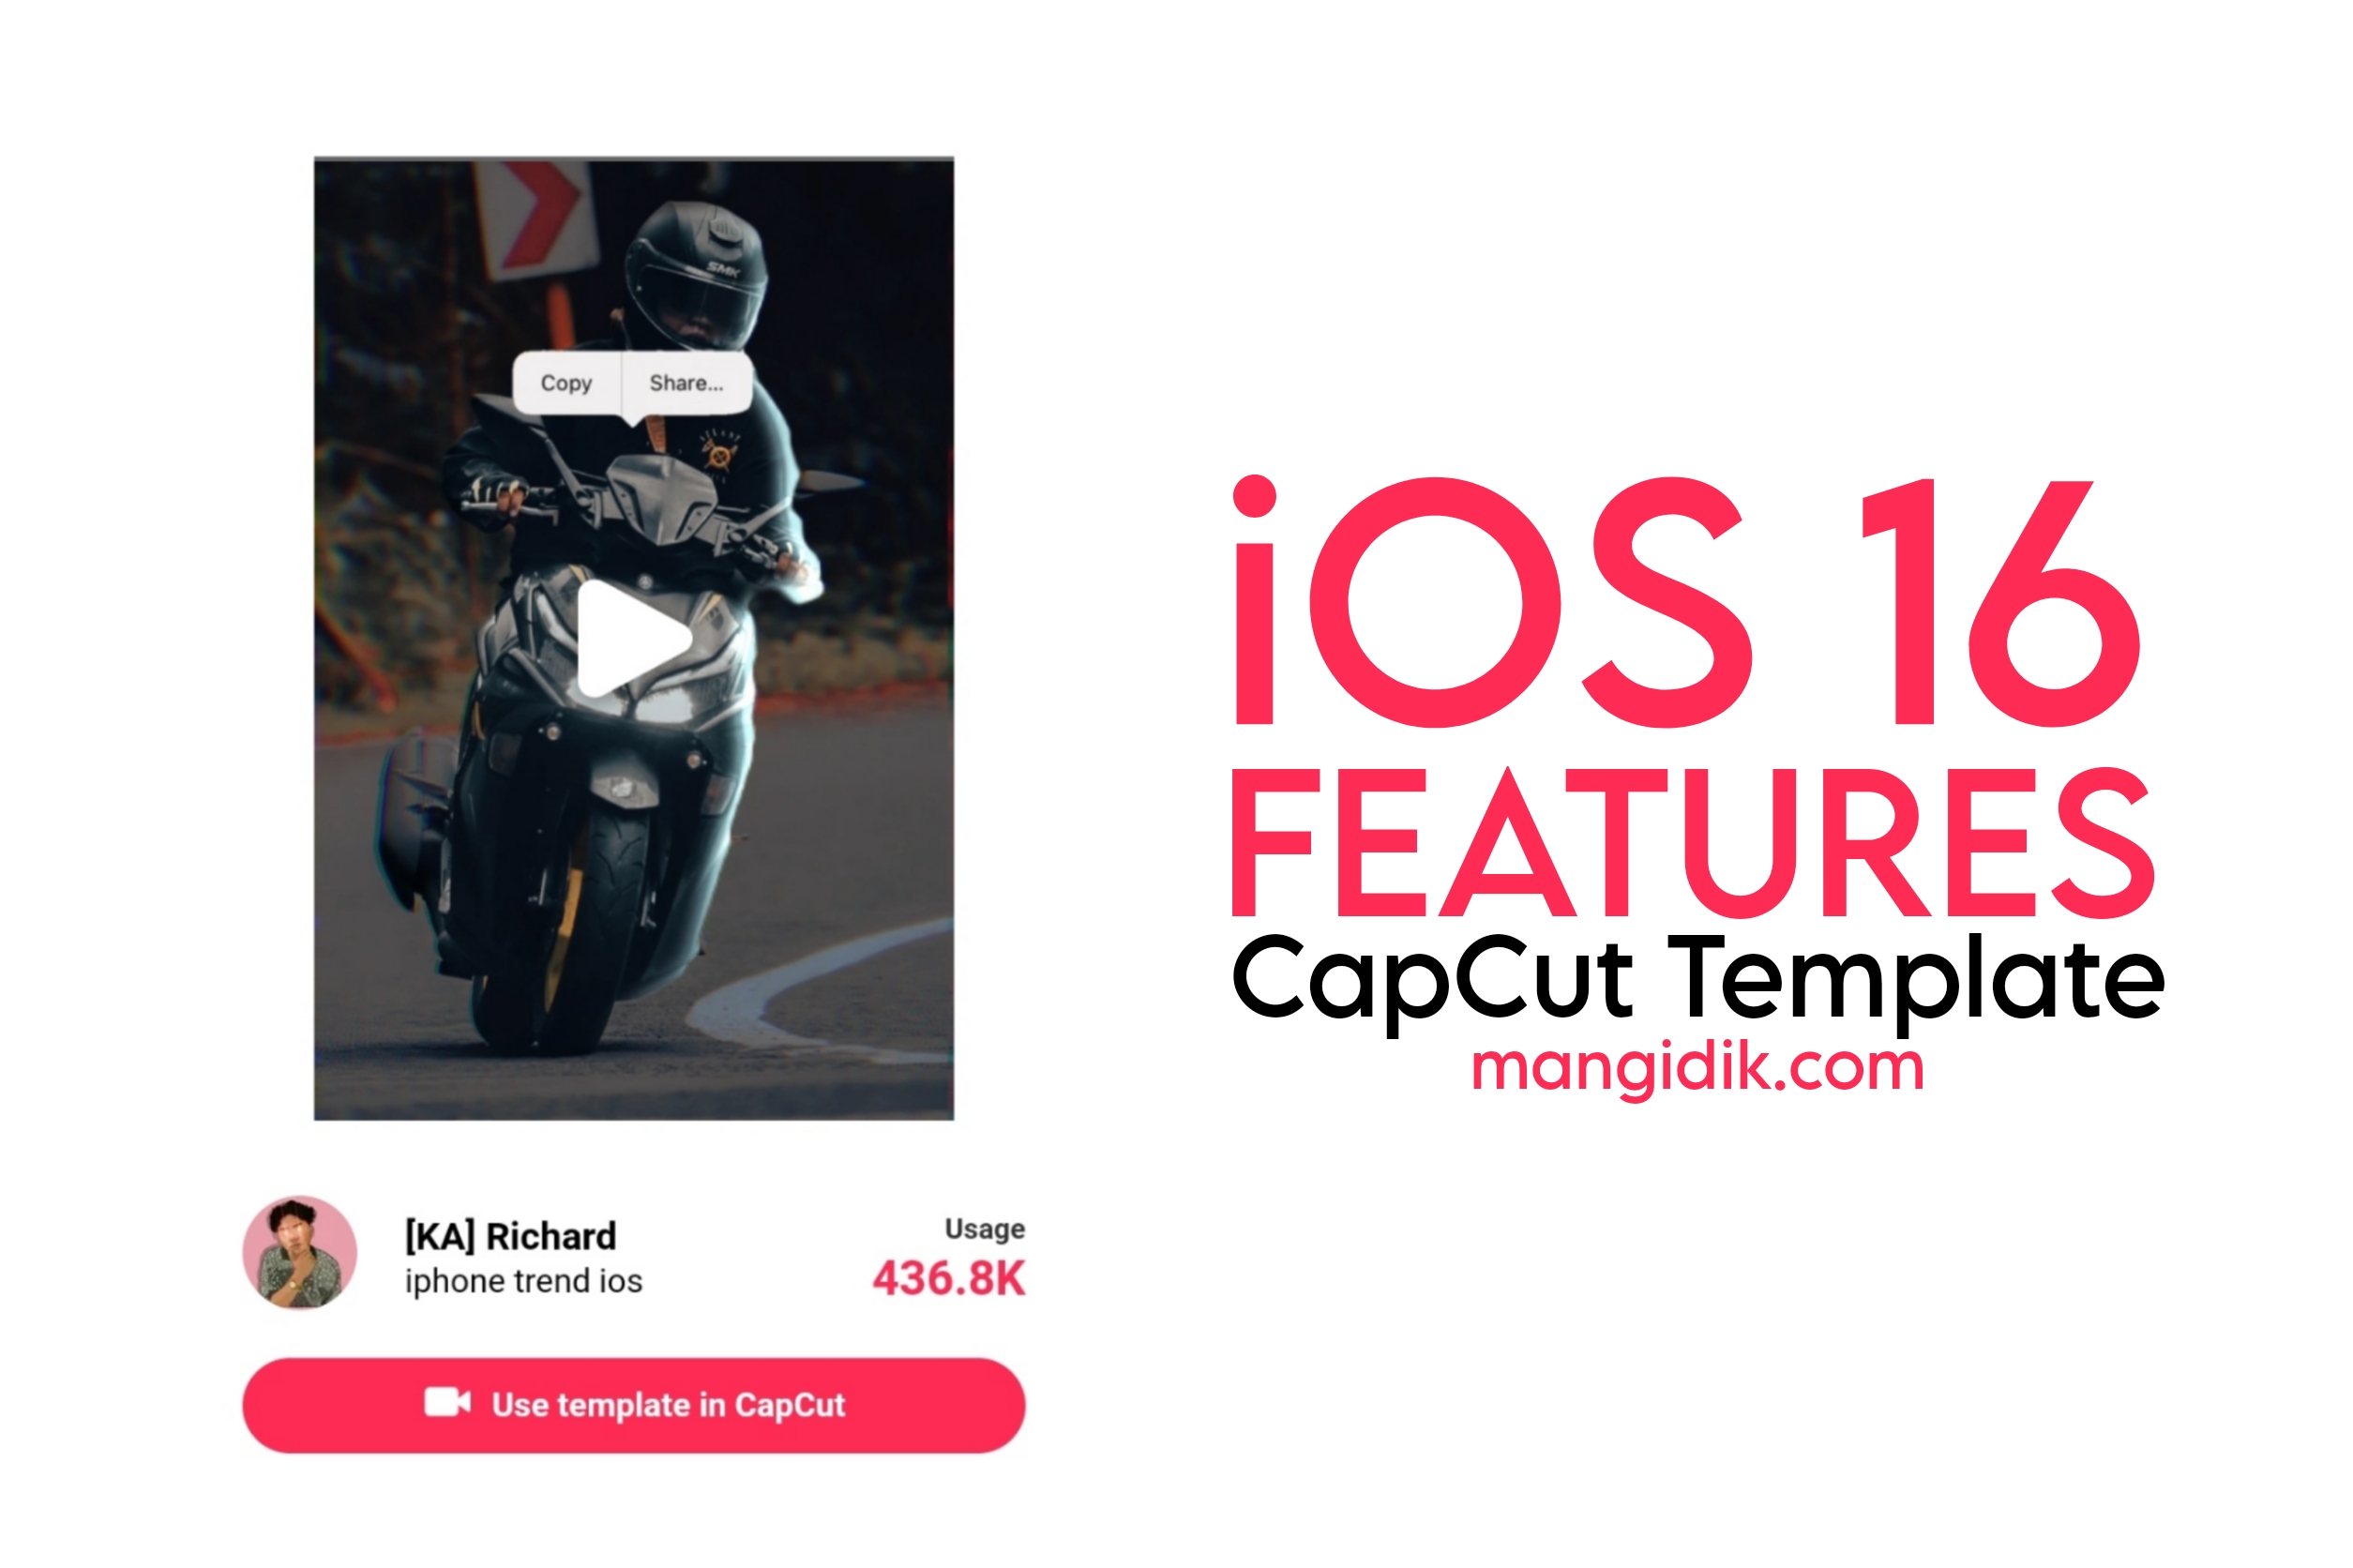 ios 16 features capcut template